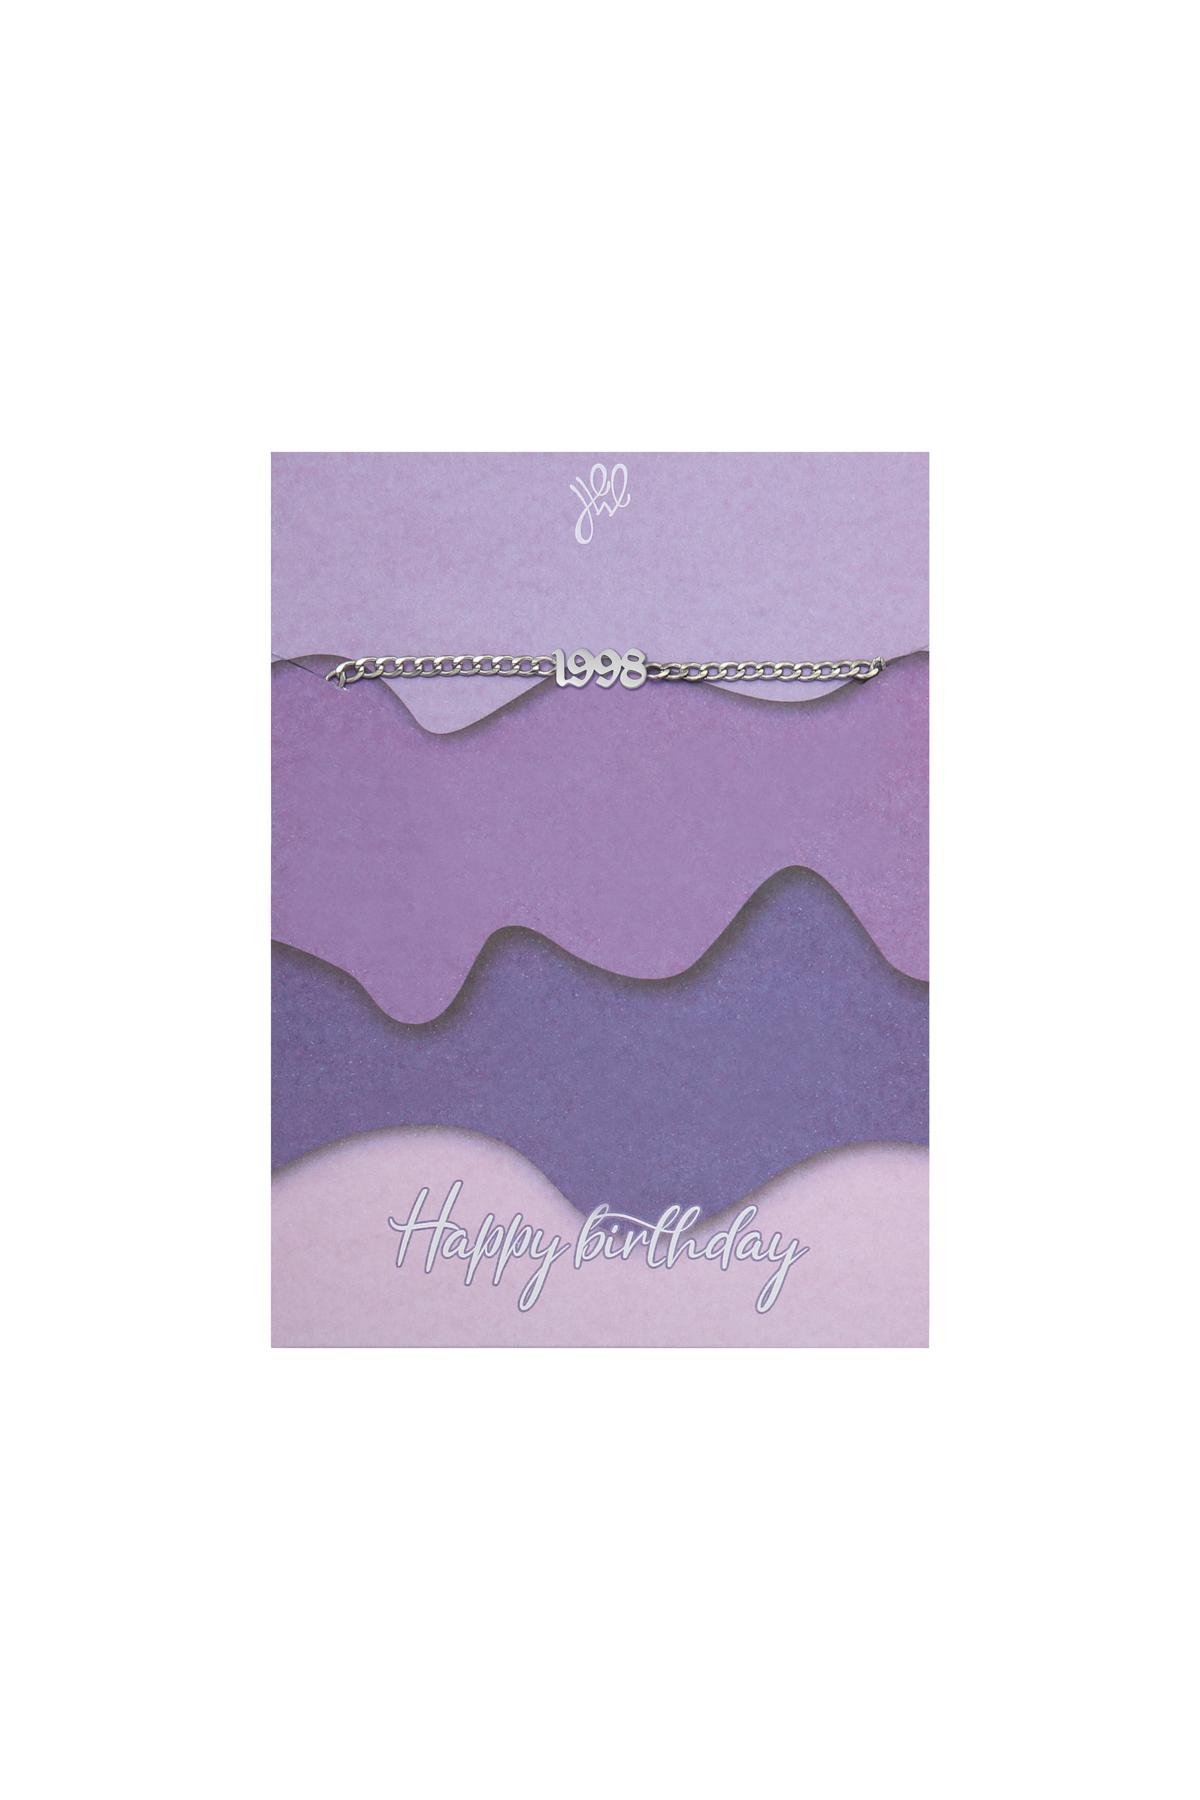 Silber / Armband Happy Birthday Years - 1998 Silber Edelstahl Bild7